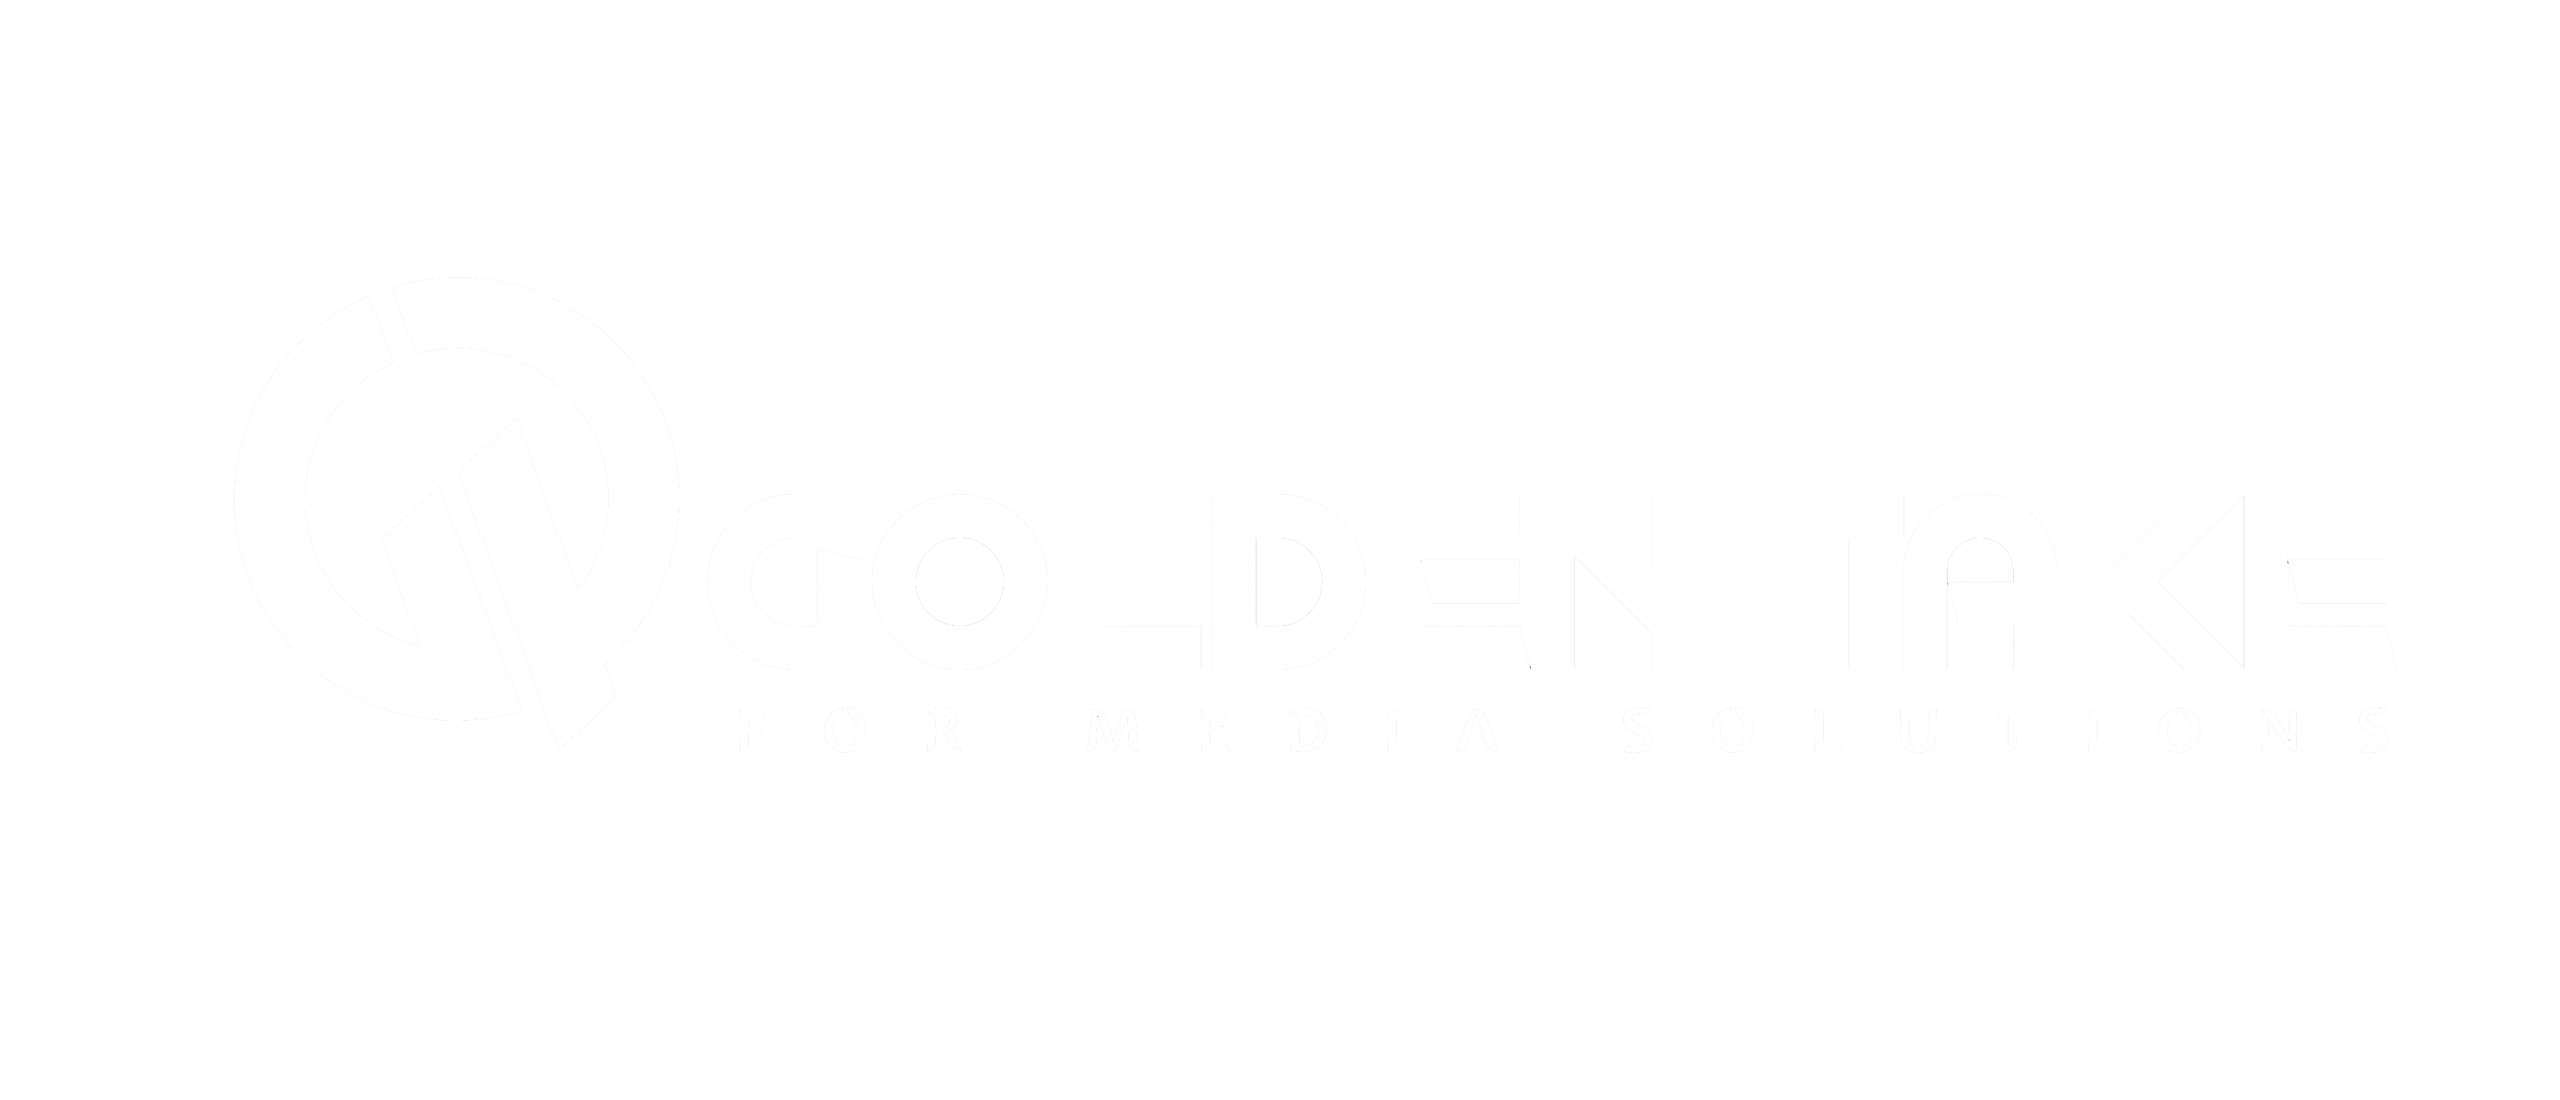 Golden Take Media Production